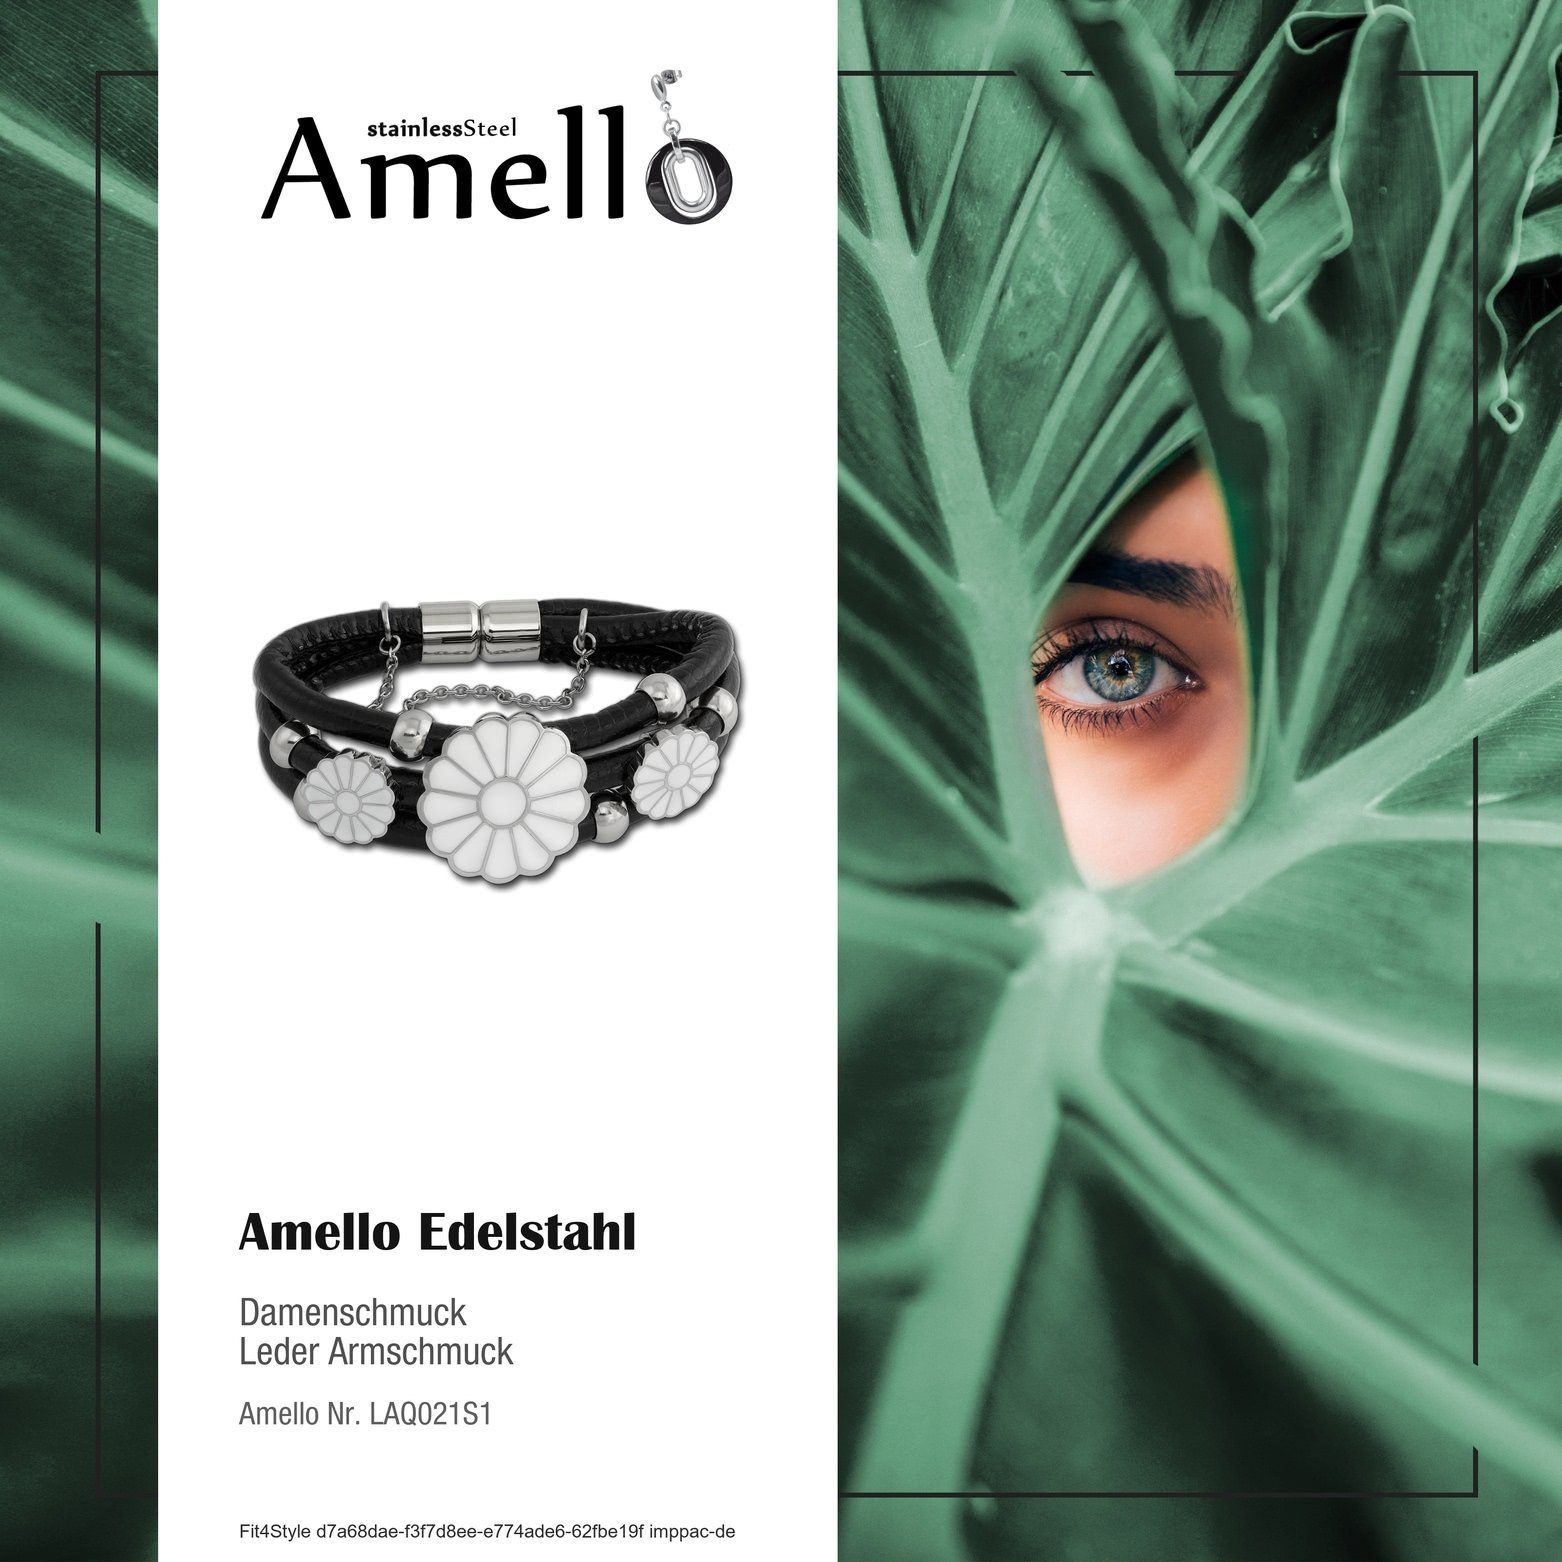 Amello Edelstahlarmband schwarz Armband schwarz Amello silber Steel), Damen Edelstahl (Verschluss) Farbe: Verschluss (Stainless Armband (Armband)